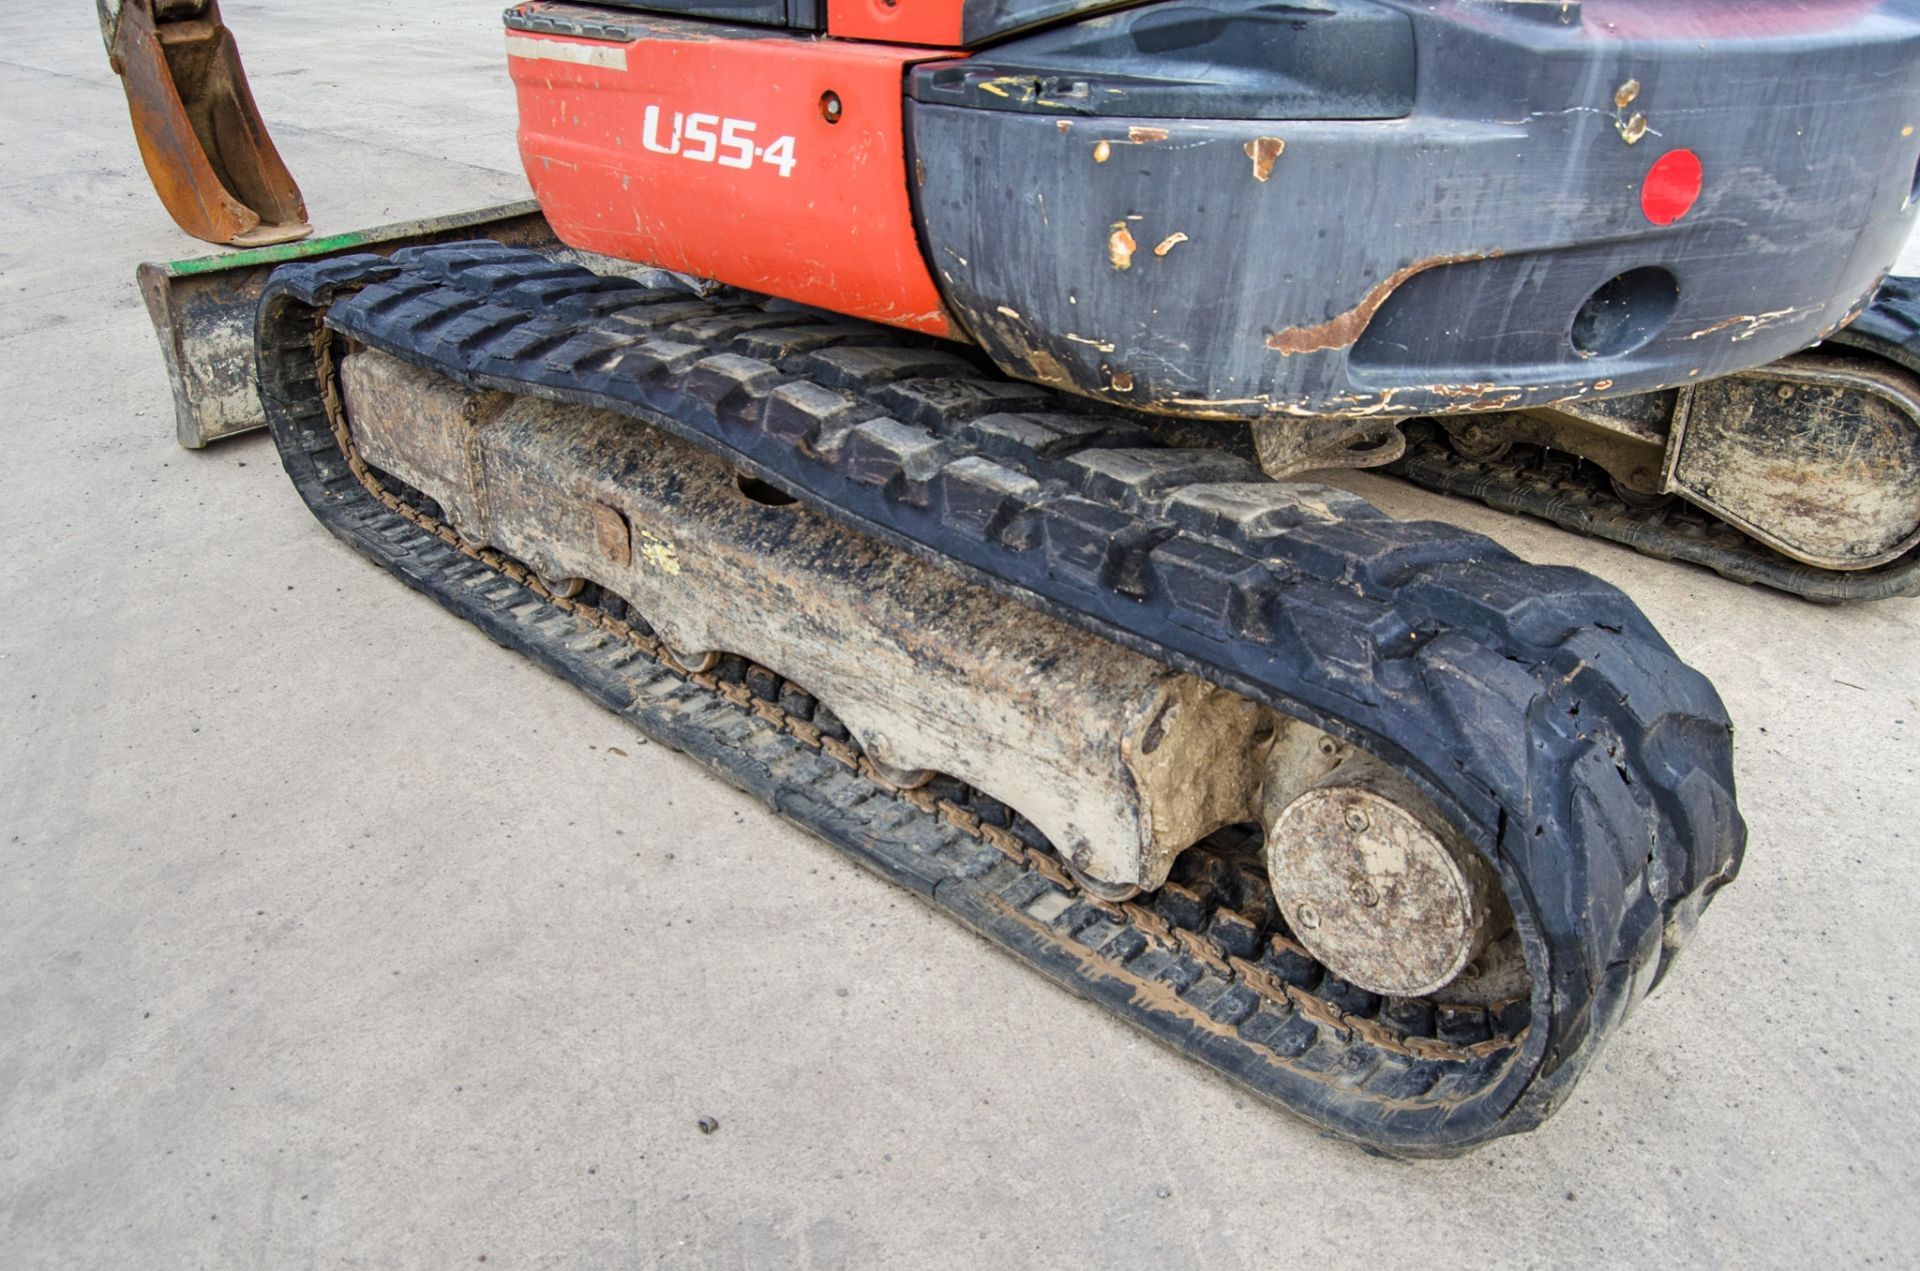 Kubota U55-4 5.5 tonne rubber tracked excavator Year: 2014 S/N: 52734 Recorded Hours: 3807 blade, - Image 9 of 27